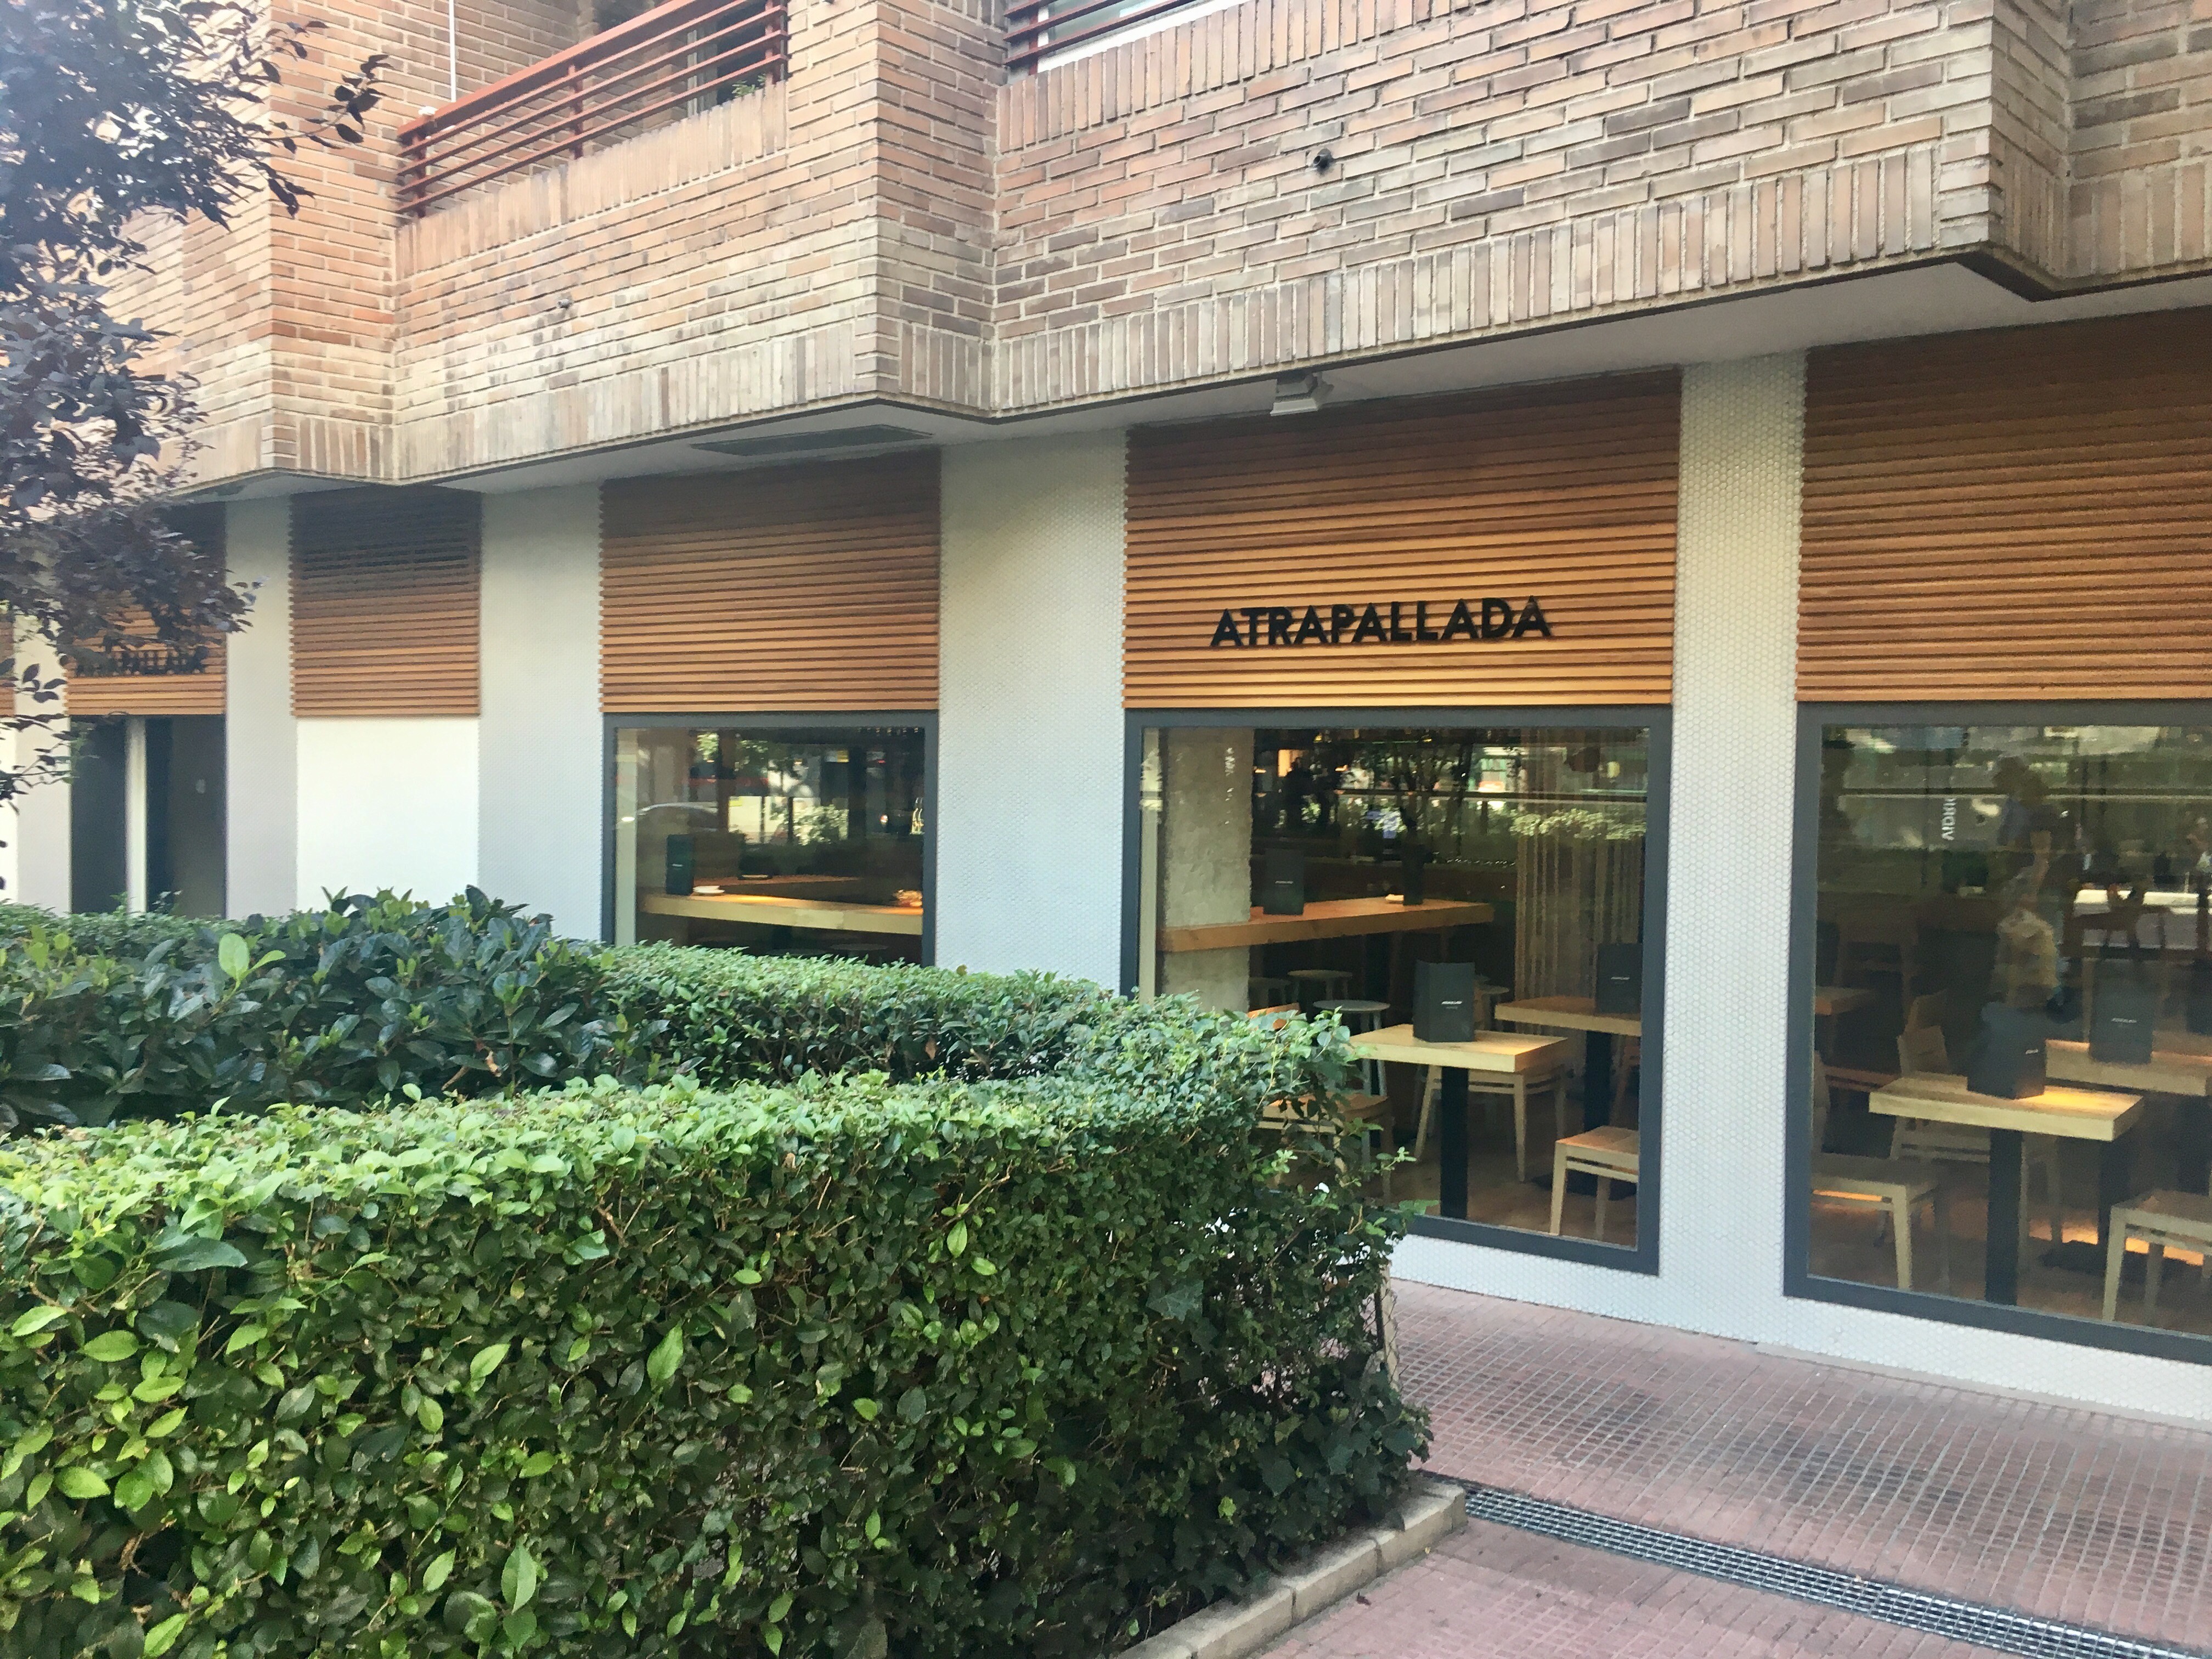 Atrapallada, Restaurant, Madrid, Spain